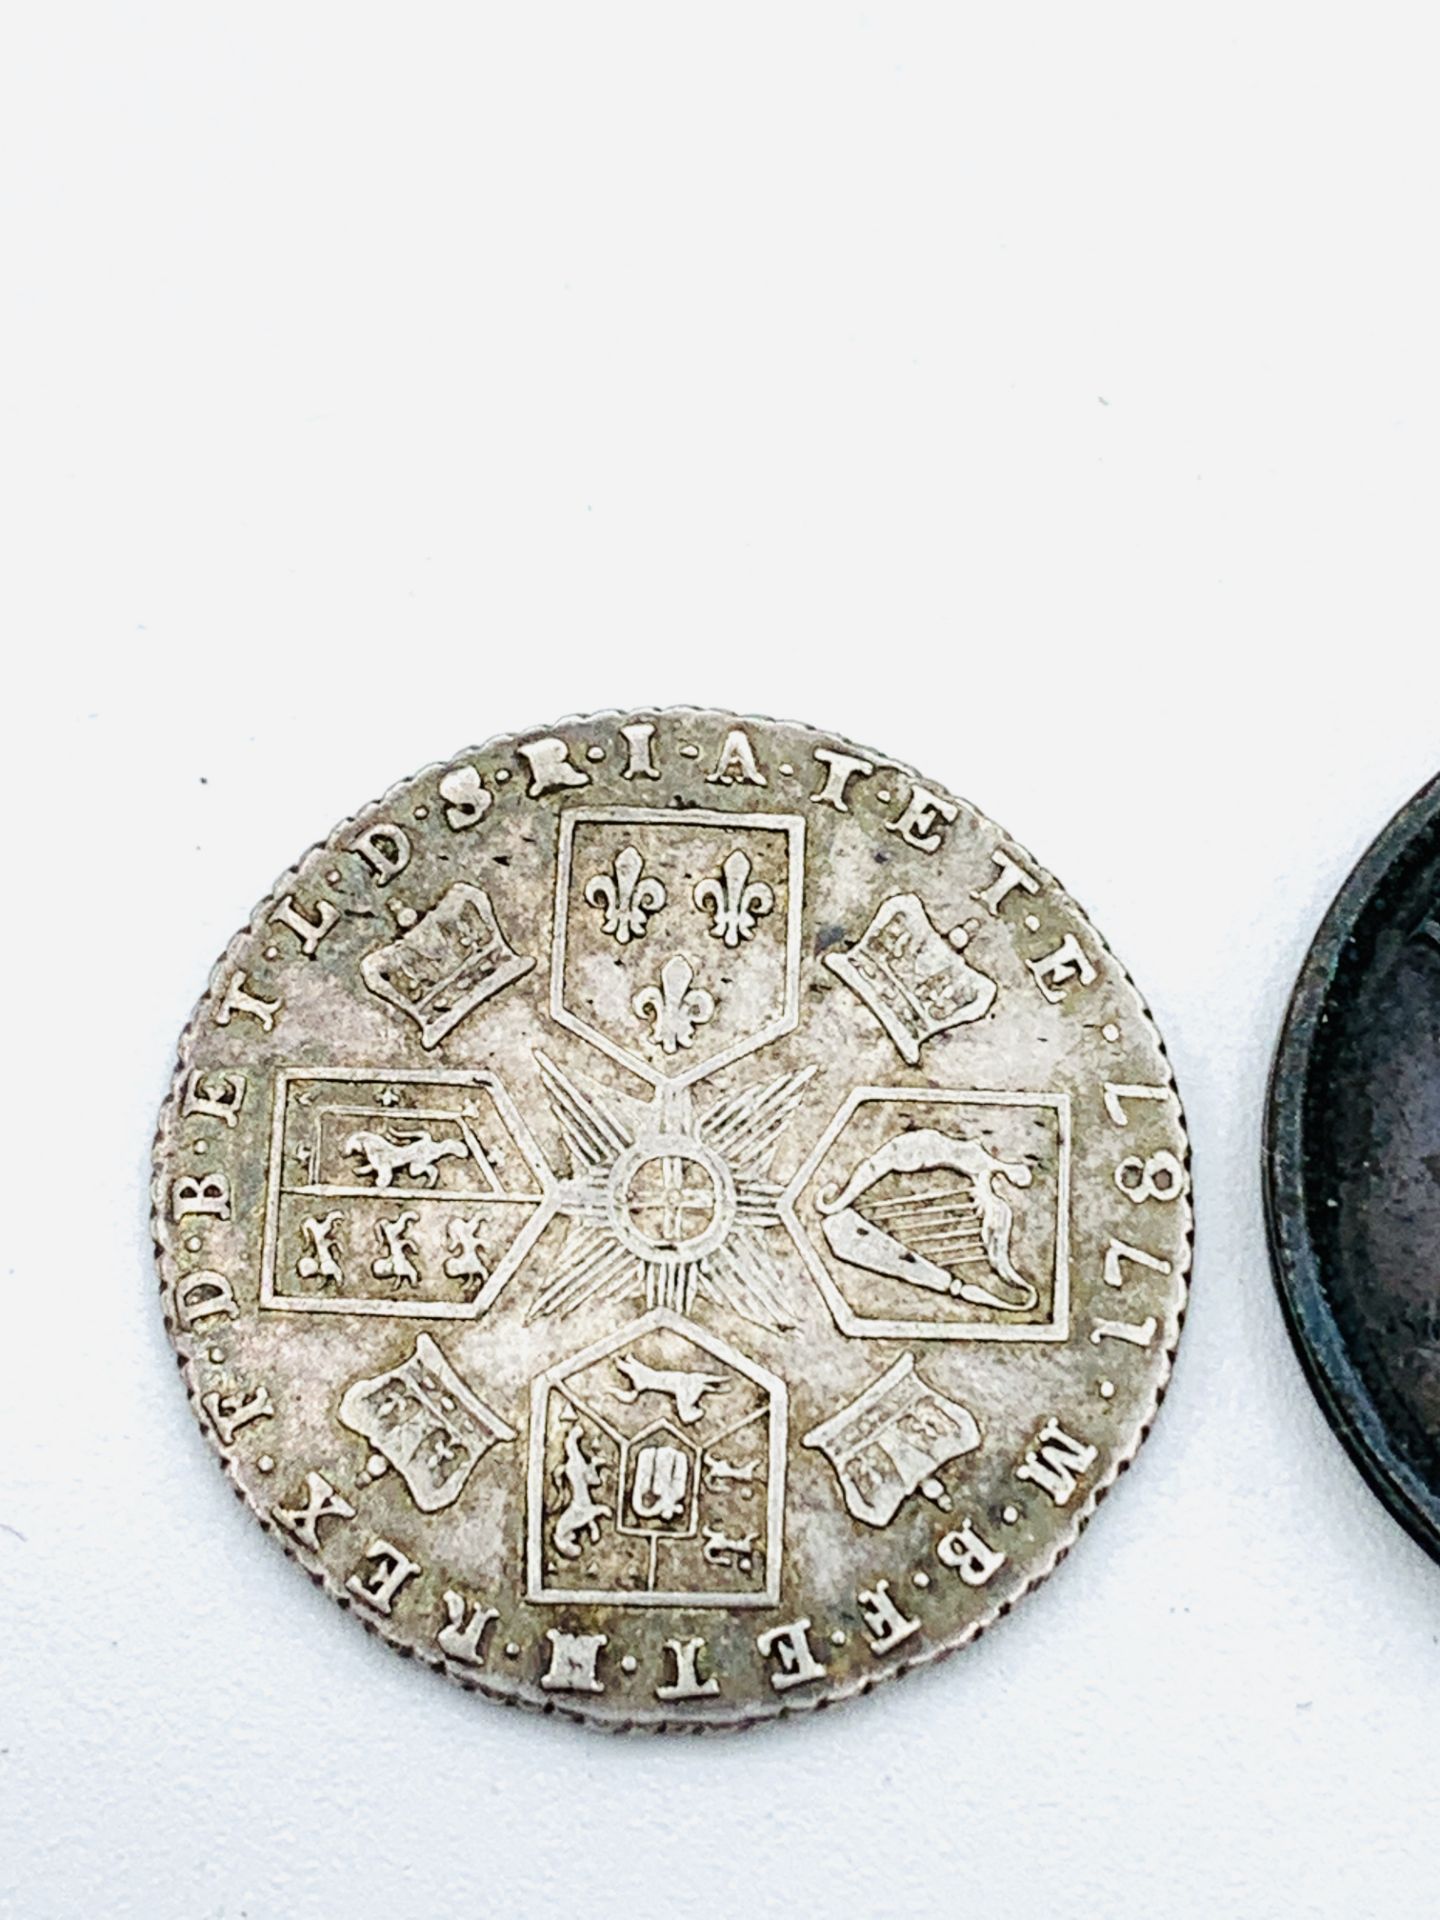 George III Silver Shilling 1787, a George III Silver Shilling 1817, and a George III penny 1806 - Image 4 of 6